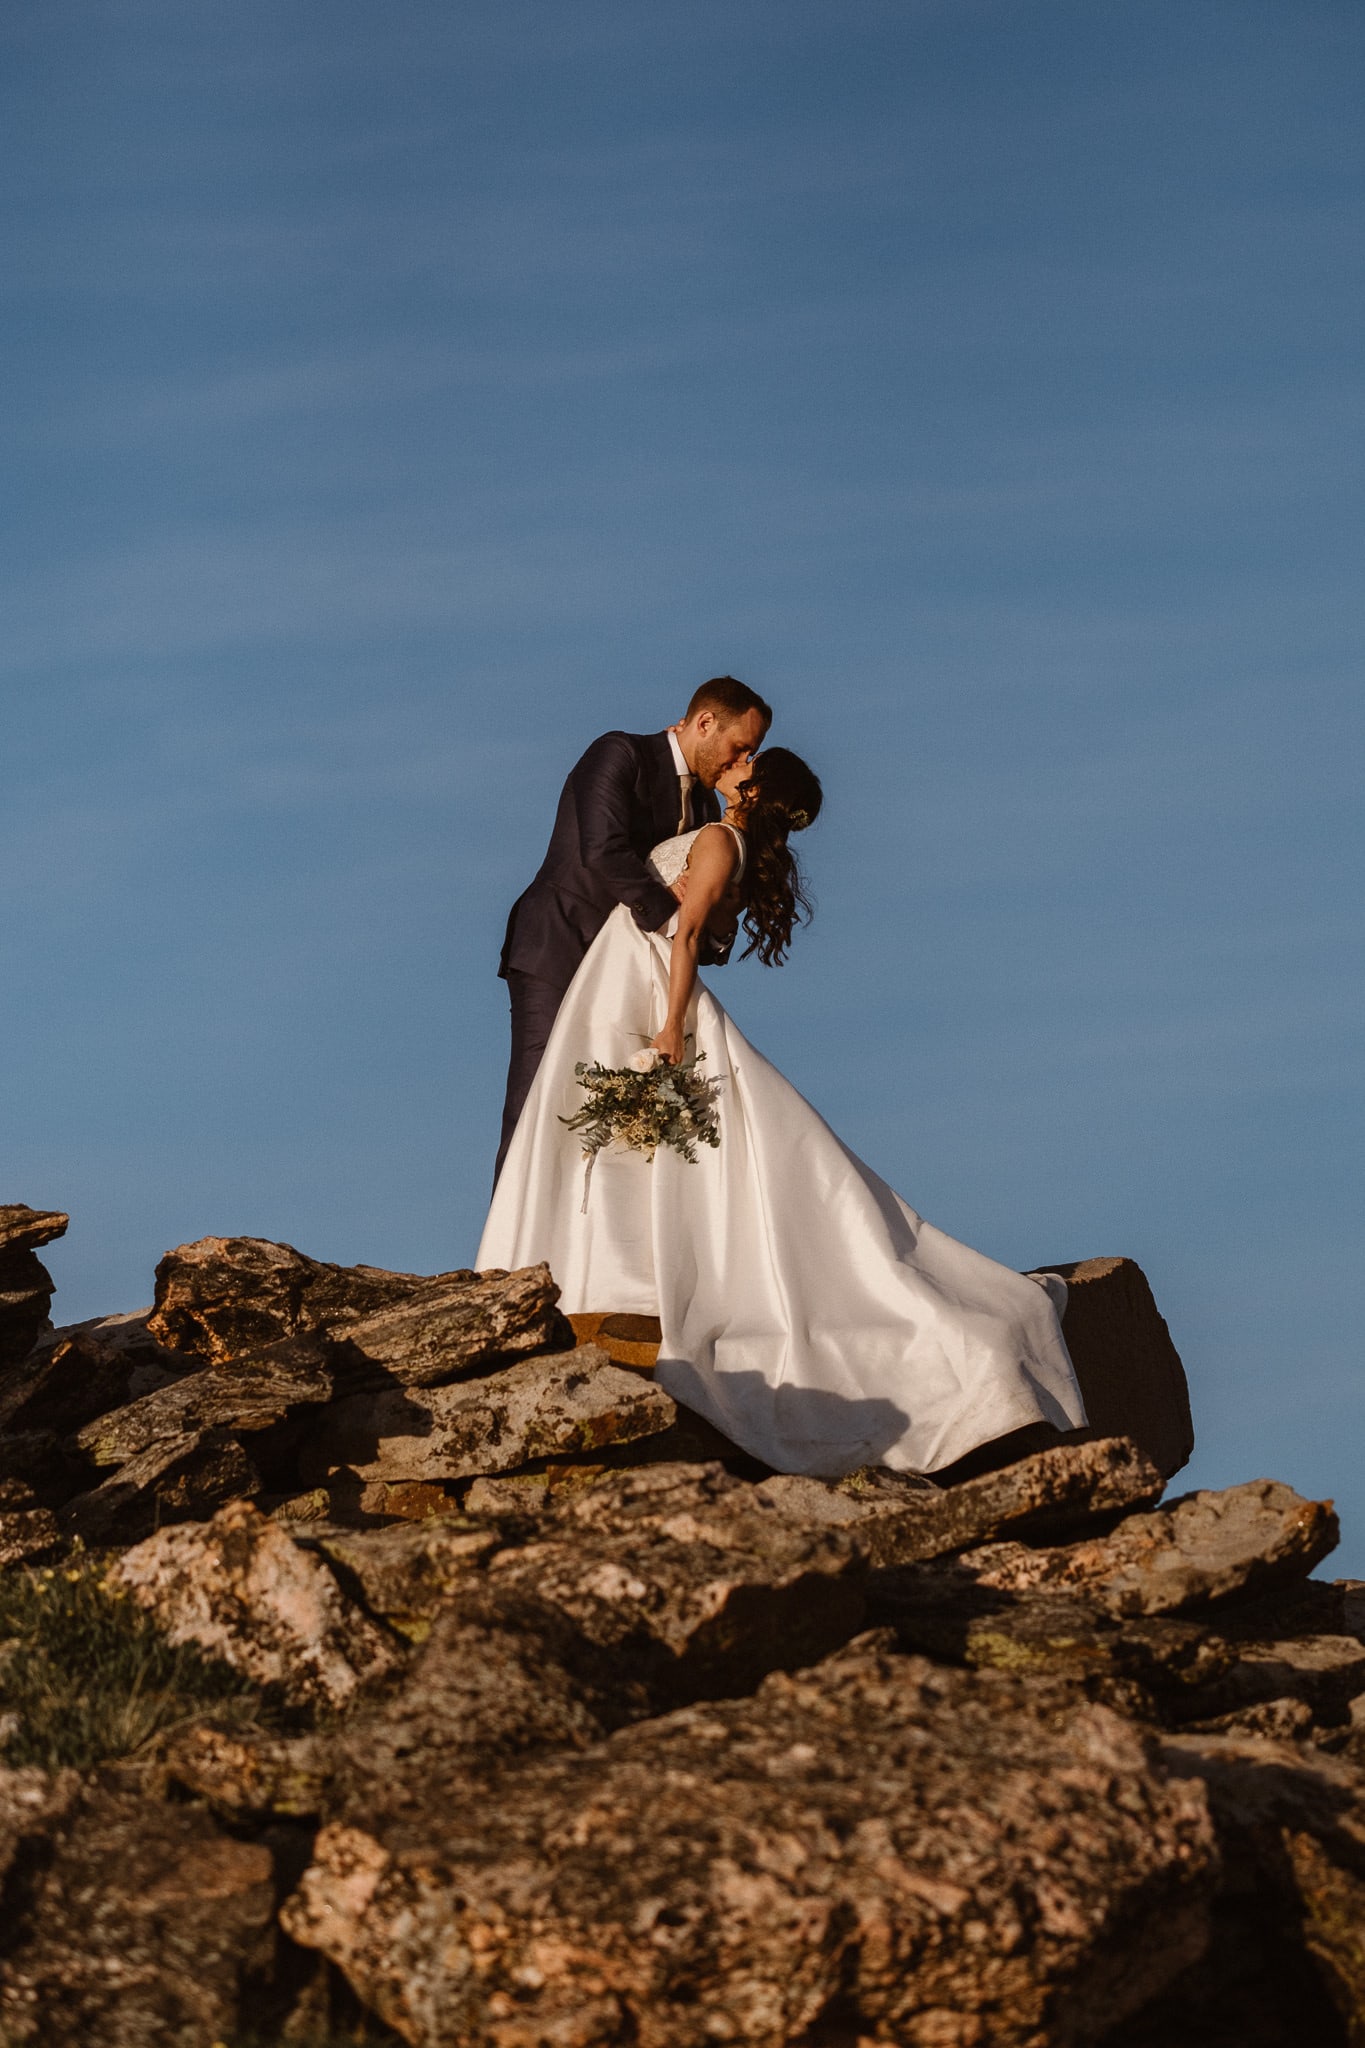 Trail Ridge Road Elopement Photographer, Colorado adventure wedding photography, mountain hiking elopement